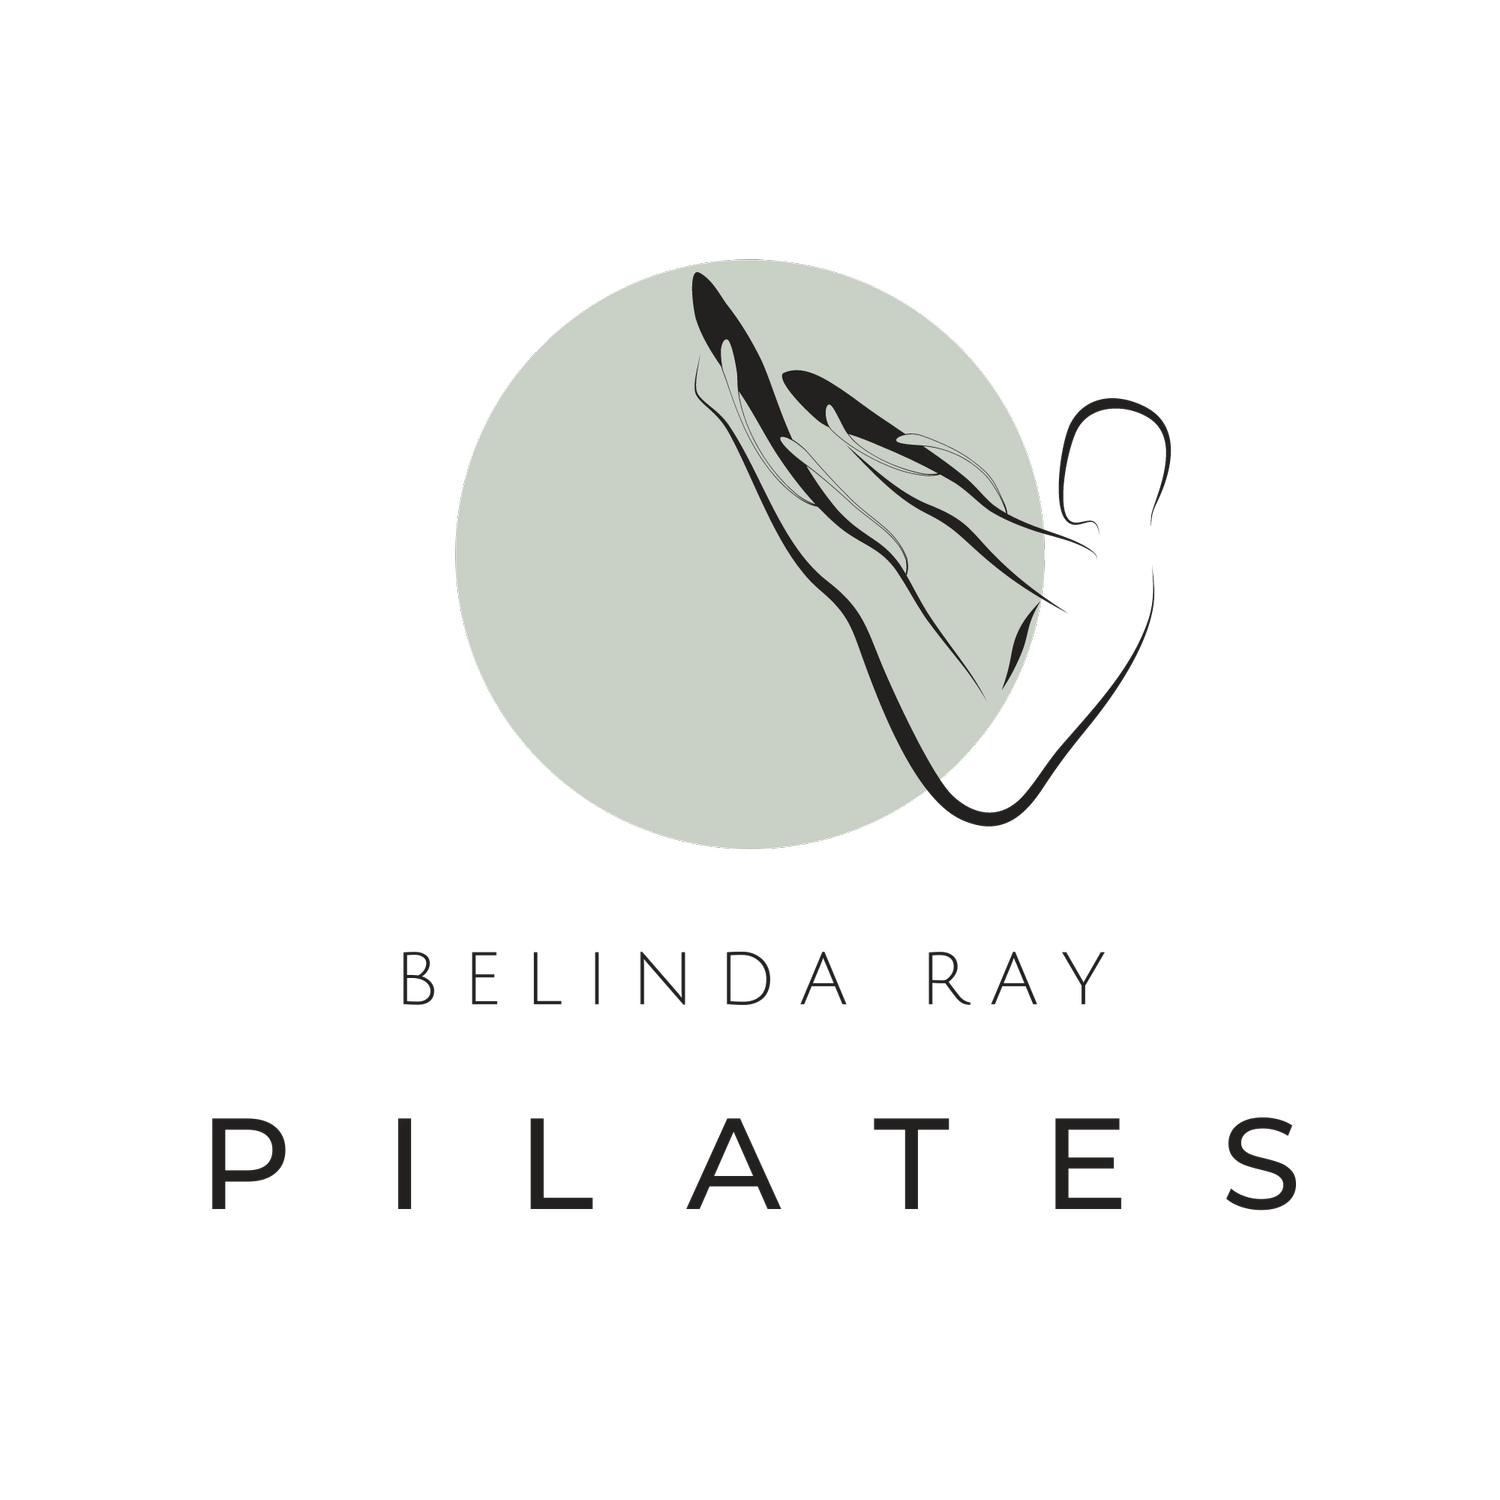 Belinda Ray Pilates